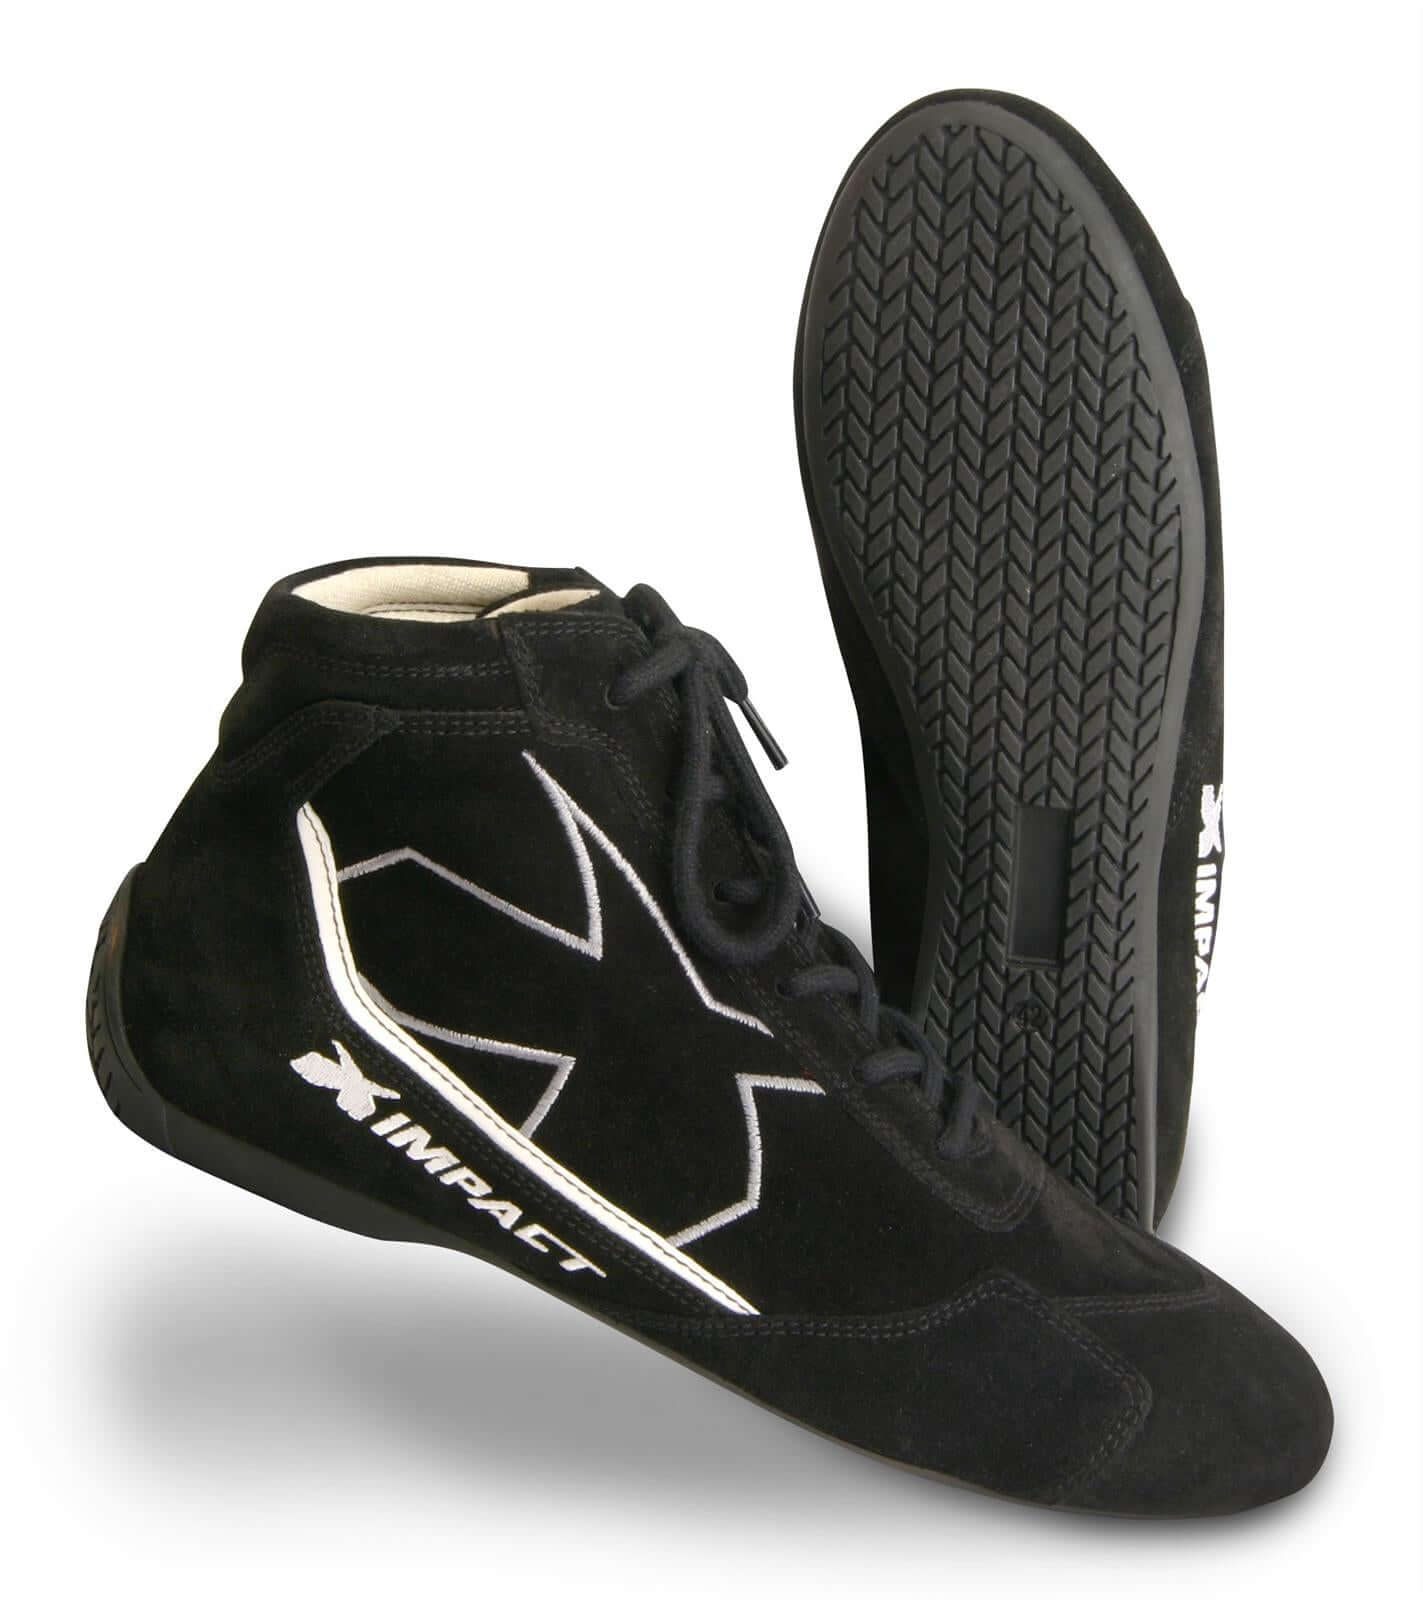 Alpha Racing Shoes - $224.95